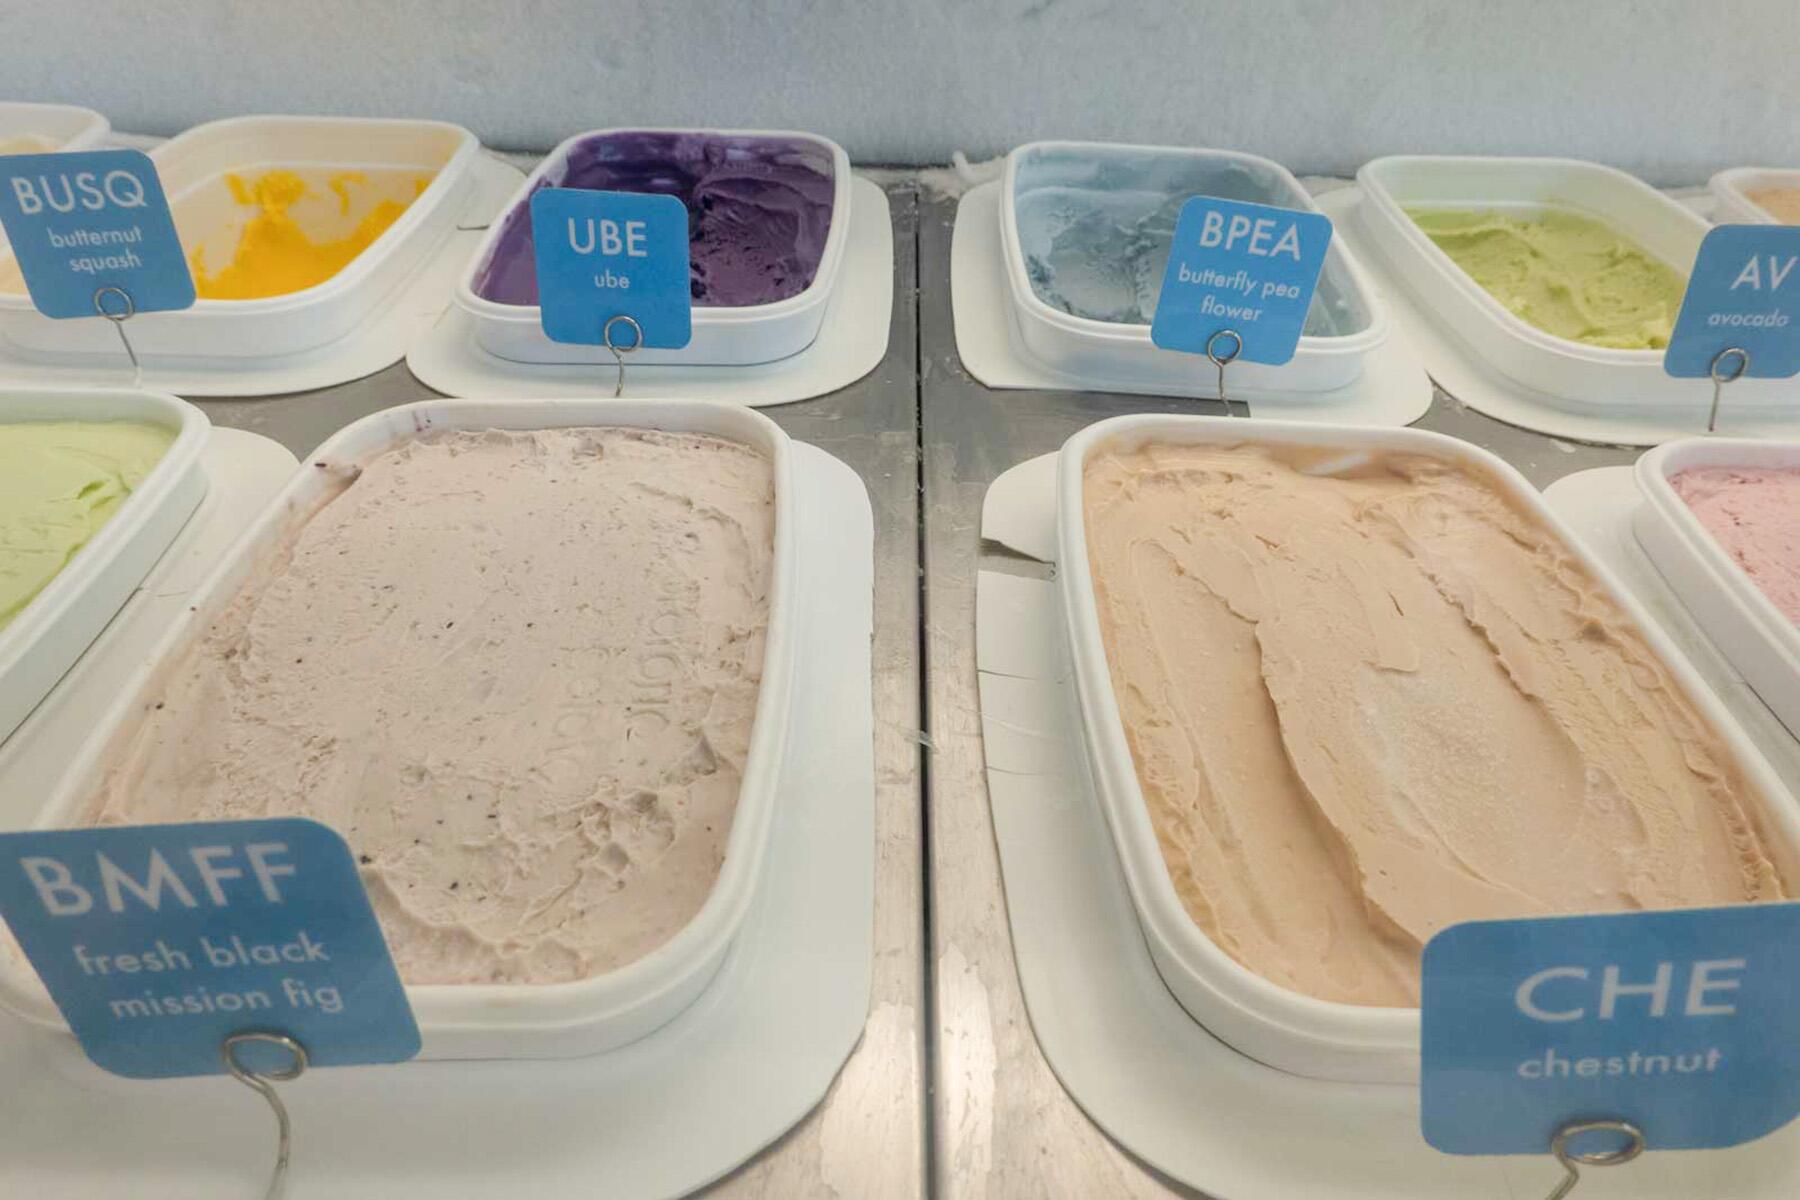 <a href='https://www.fodors.com/world/north-america/usa/new-york/new-york-city/experiences/news/photos/best-places-for-ice-cream-in-new-york-city#'>From &quot;The 12 Best Places for Ice Cream in New York City: il laboratorio del gelato&quot;</a>